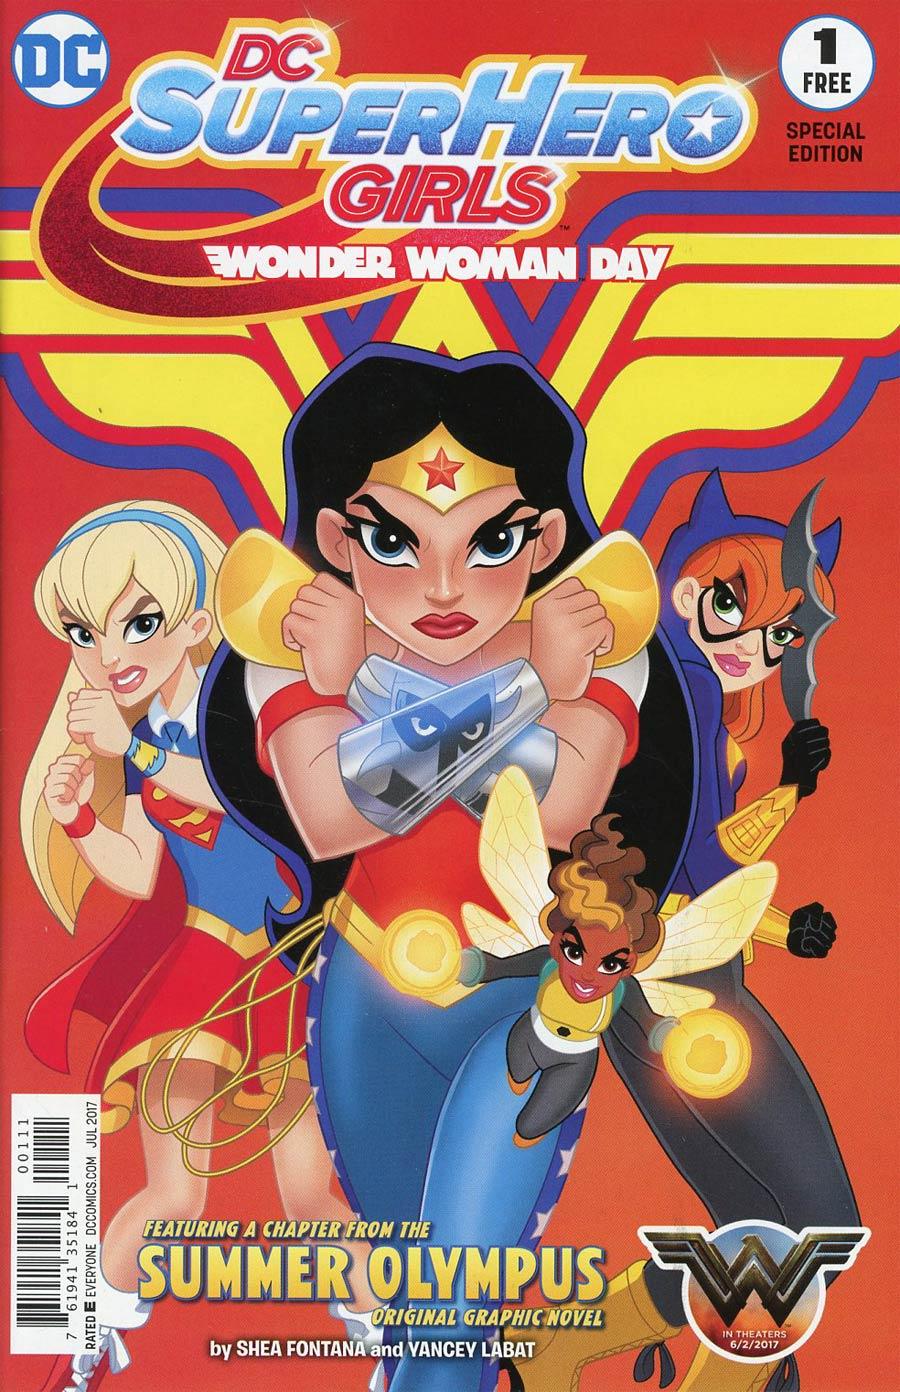 DC Super Hero Girls Wonder Woman Day Special Edition Vol. 1 #1